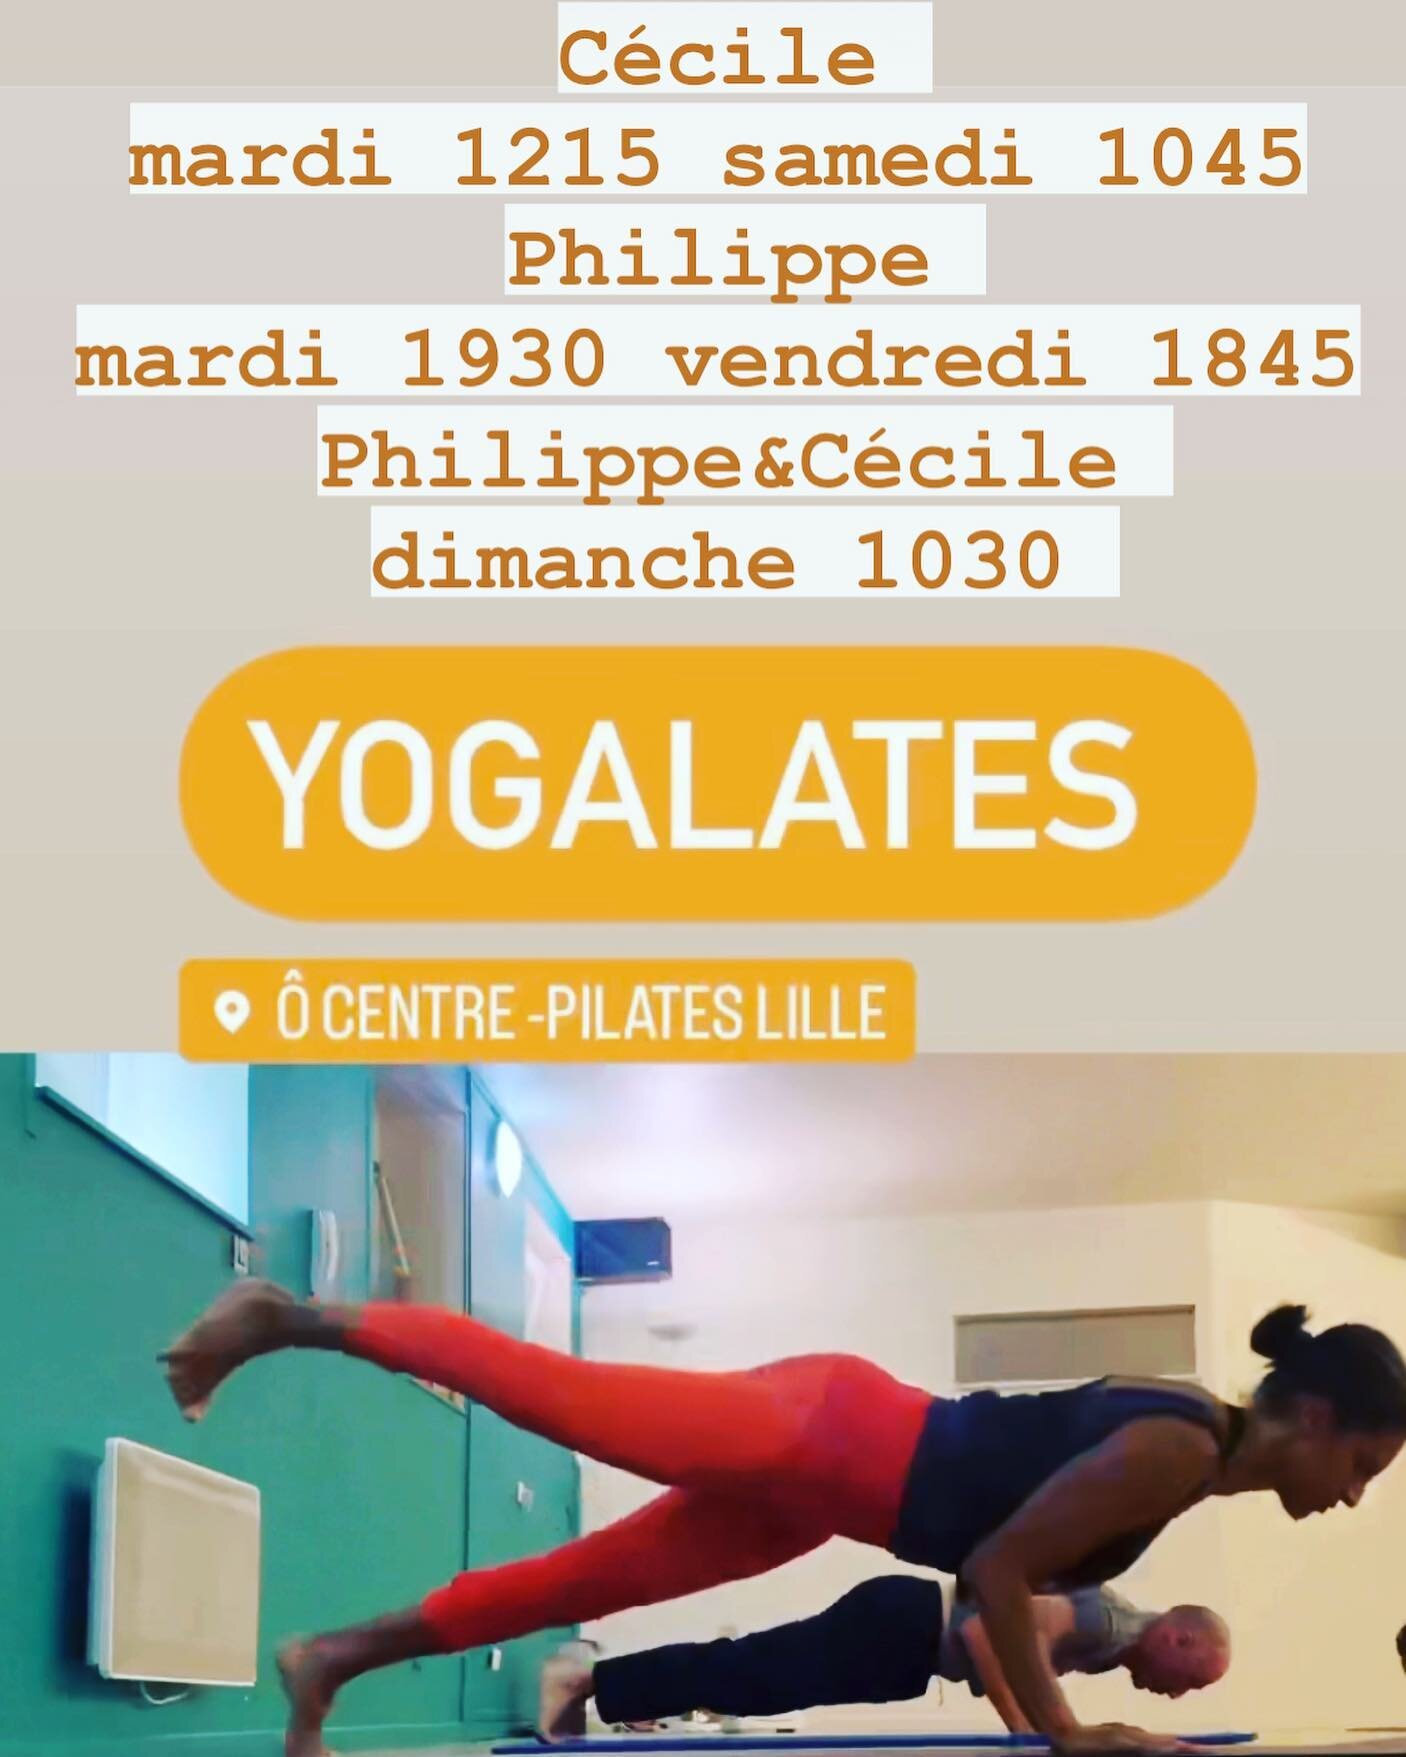 #vitalit&eacute; #pilateslille #pilateslilleyoga #ocentrelille #pilates&agrave;lille #yogalille #yoga&agrave;lille  #yogalates #souplesse #renforcement #mobilit&eacute;dos